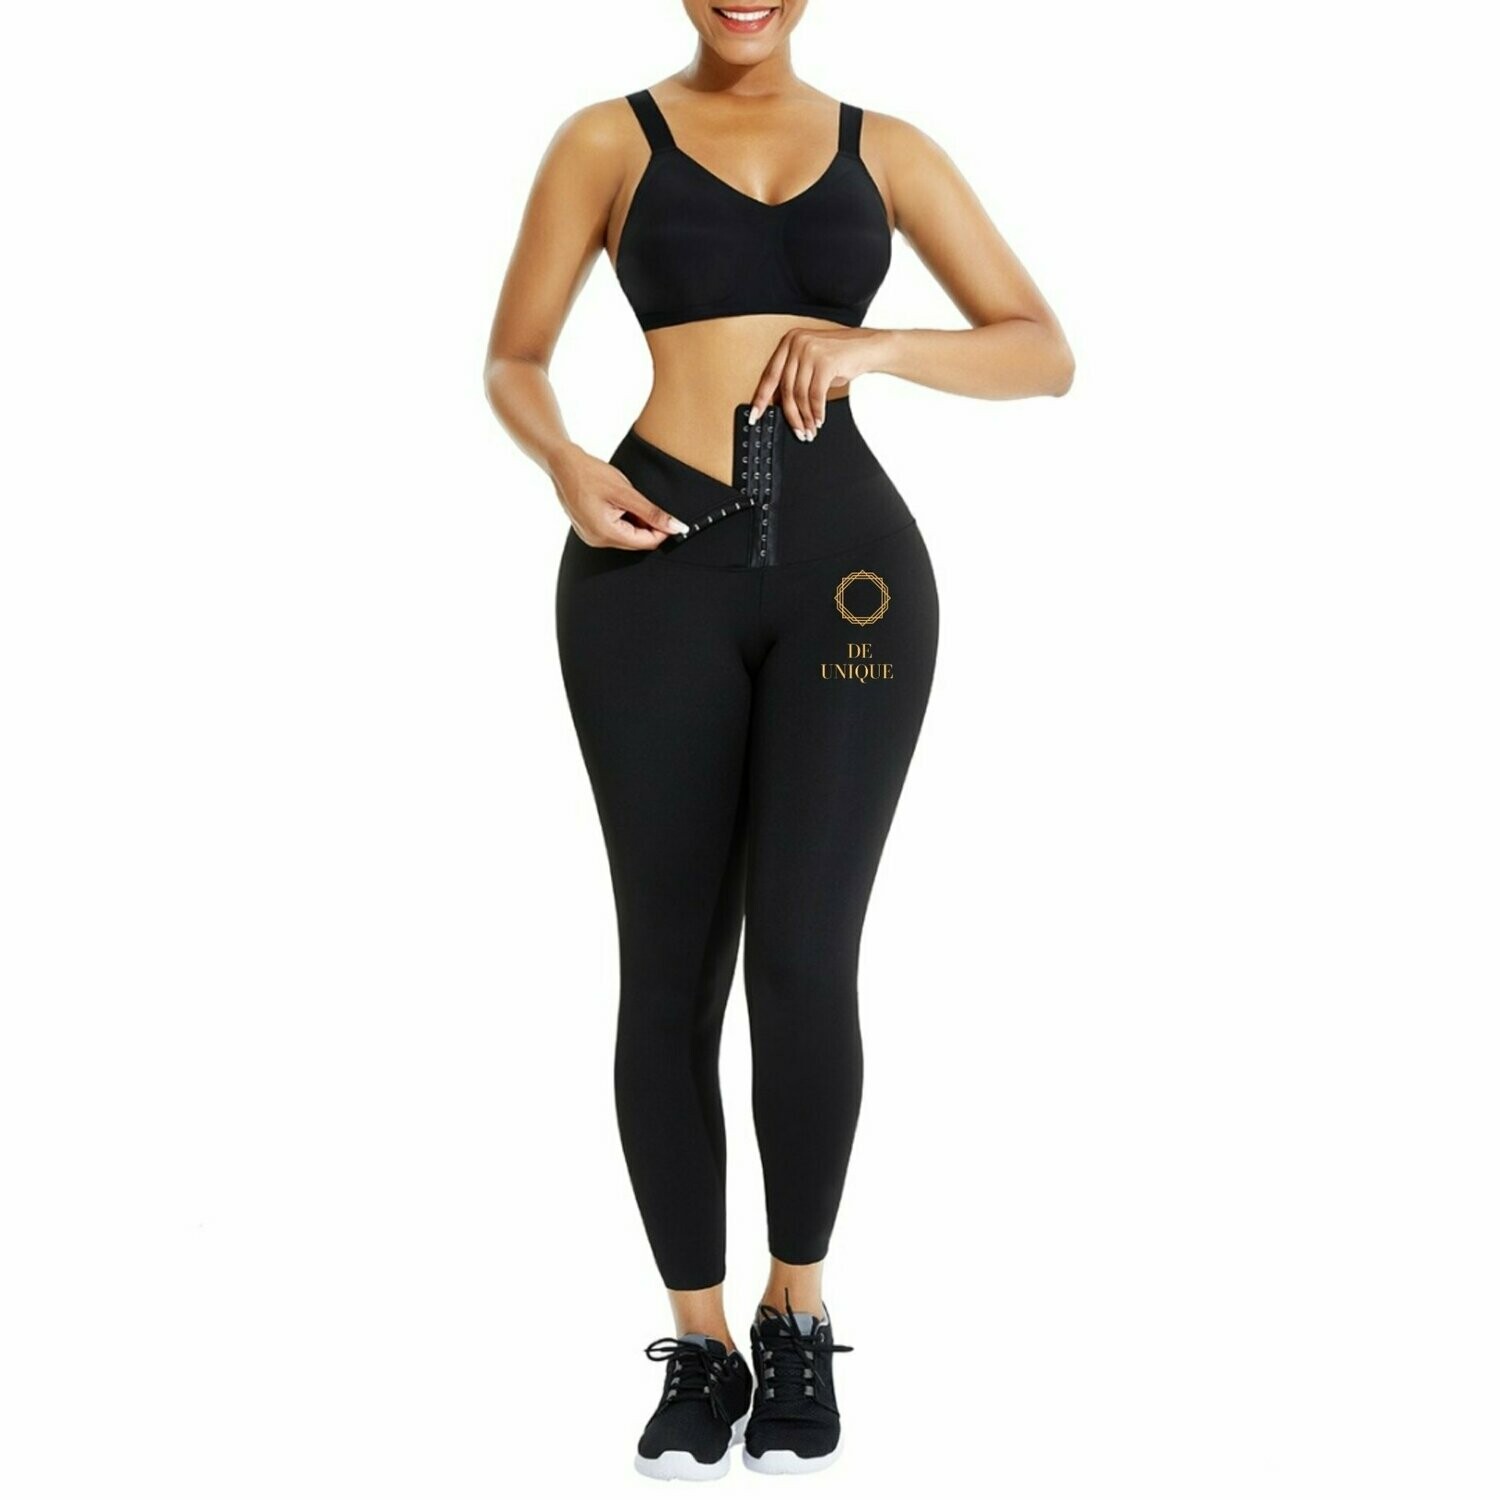 Black Medium High waist trainer leggings